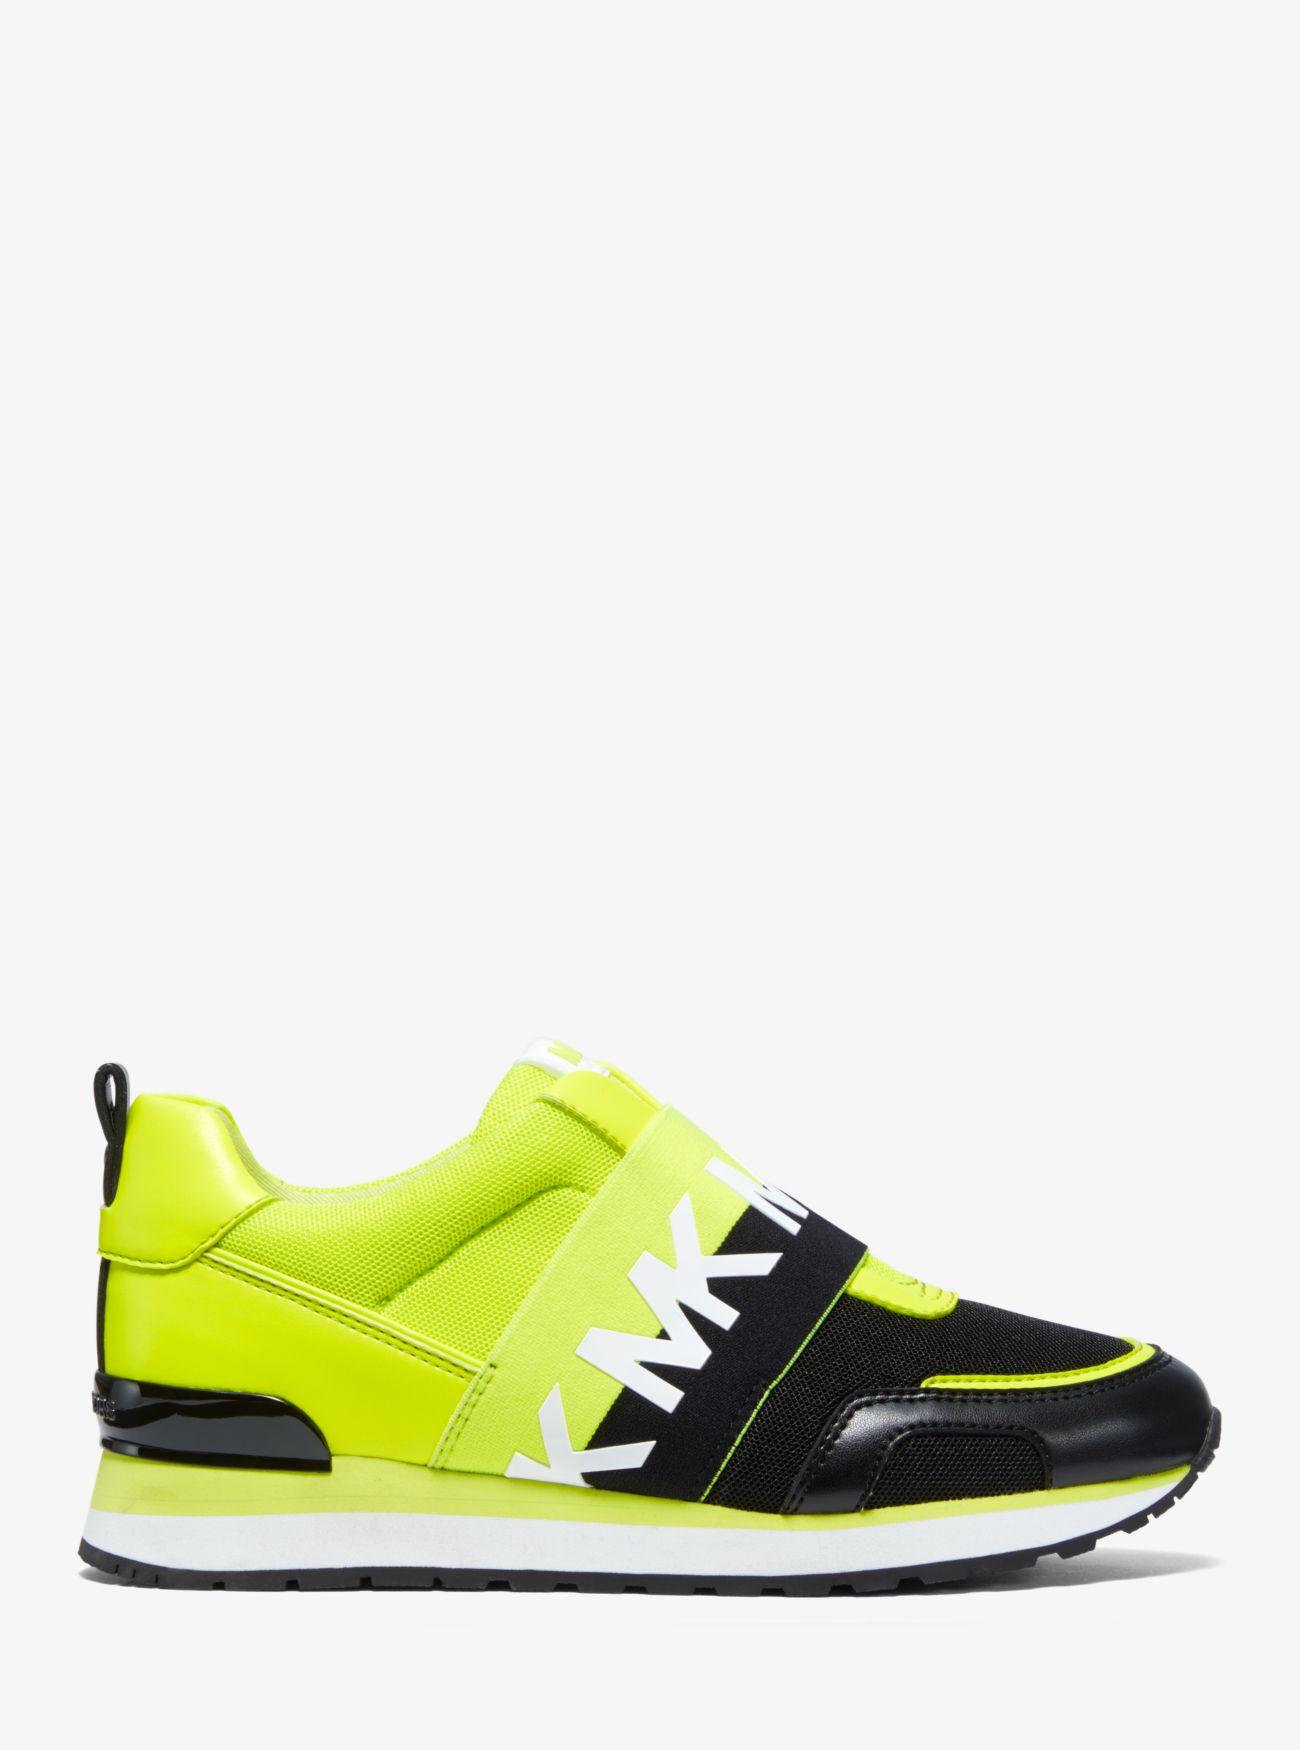 michael kors lime green shoes